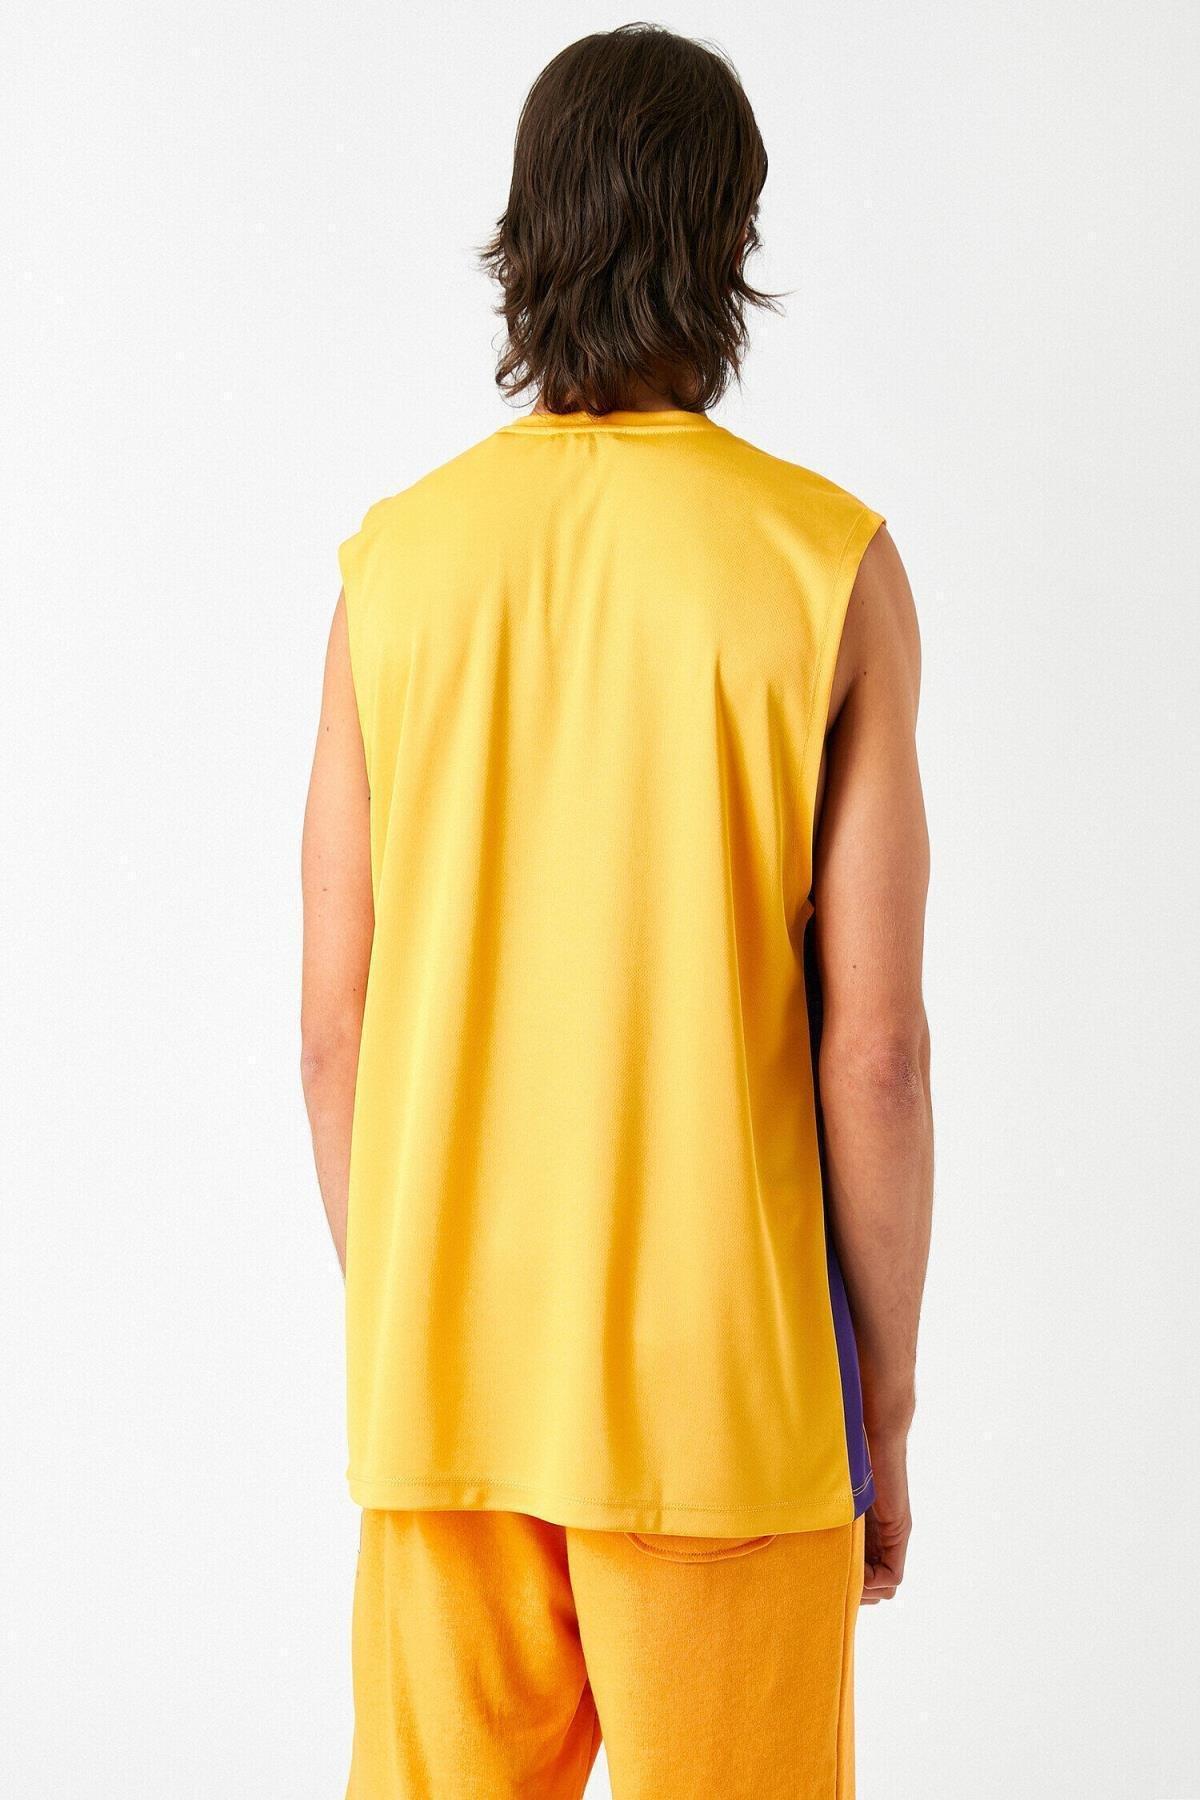 Koton - Yellow Basketball Rhino Printed Undershirt